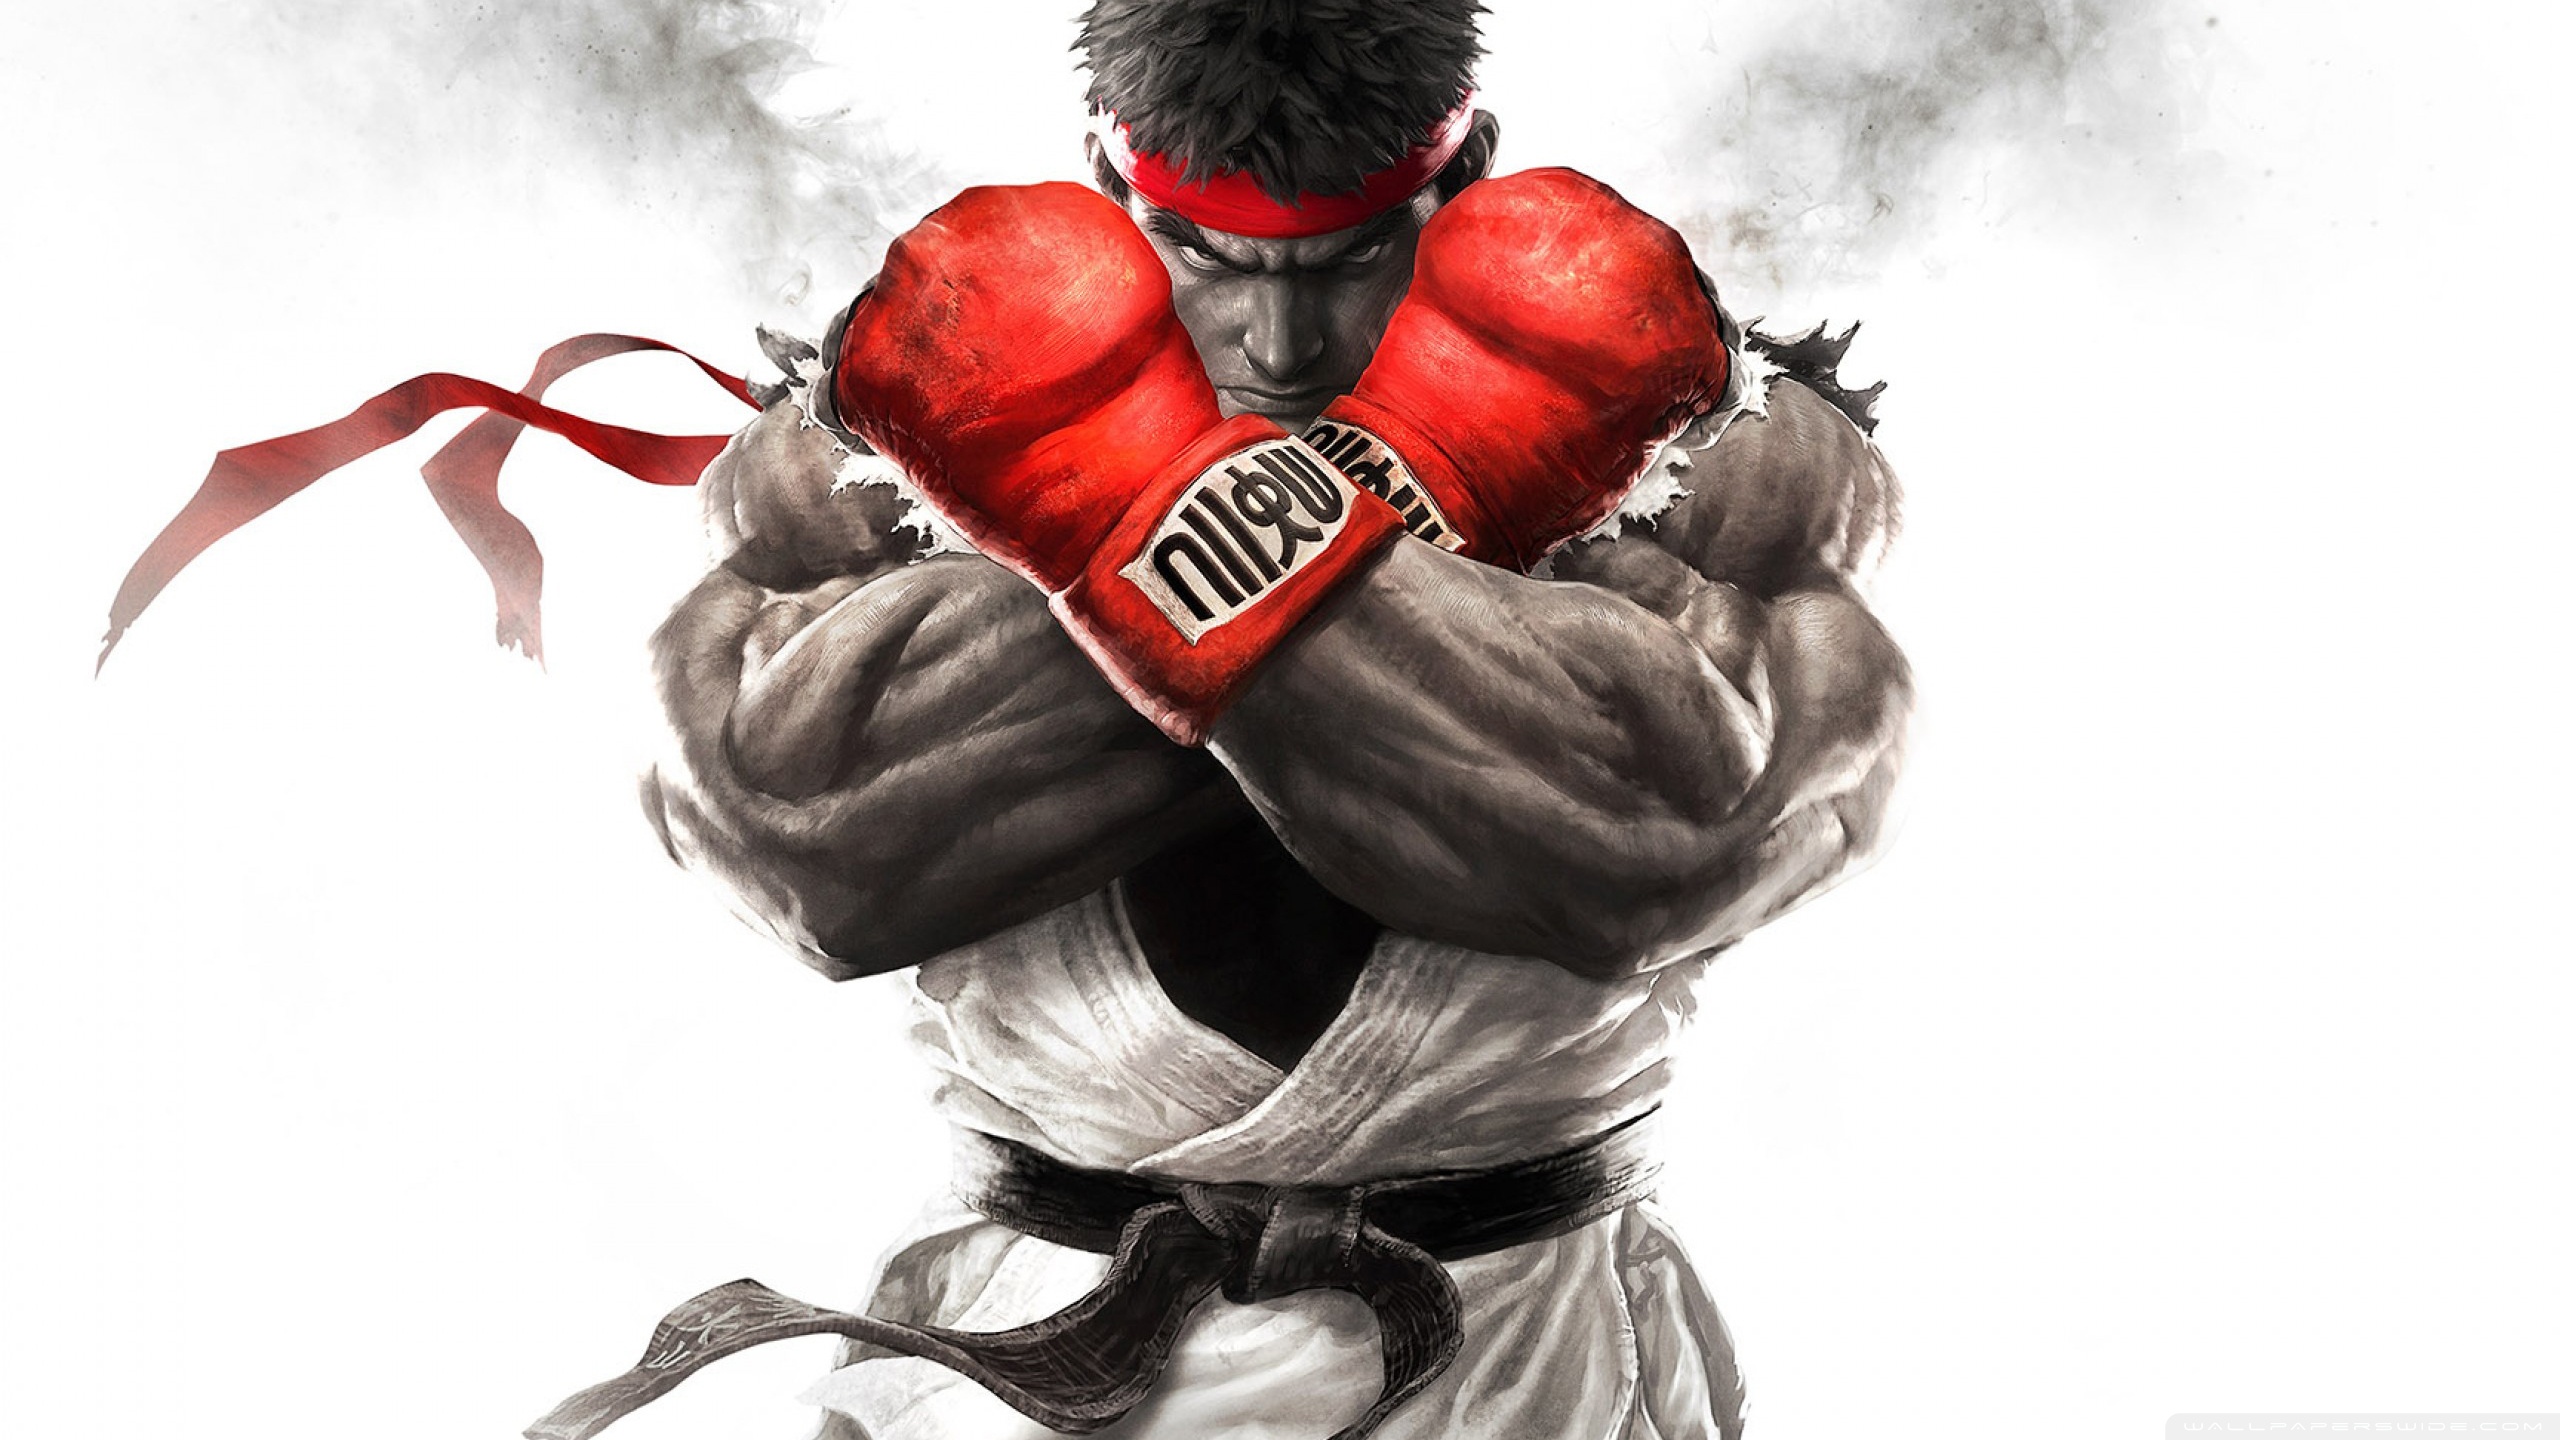 Street Fighter - HD Wallpaper 